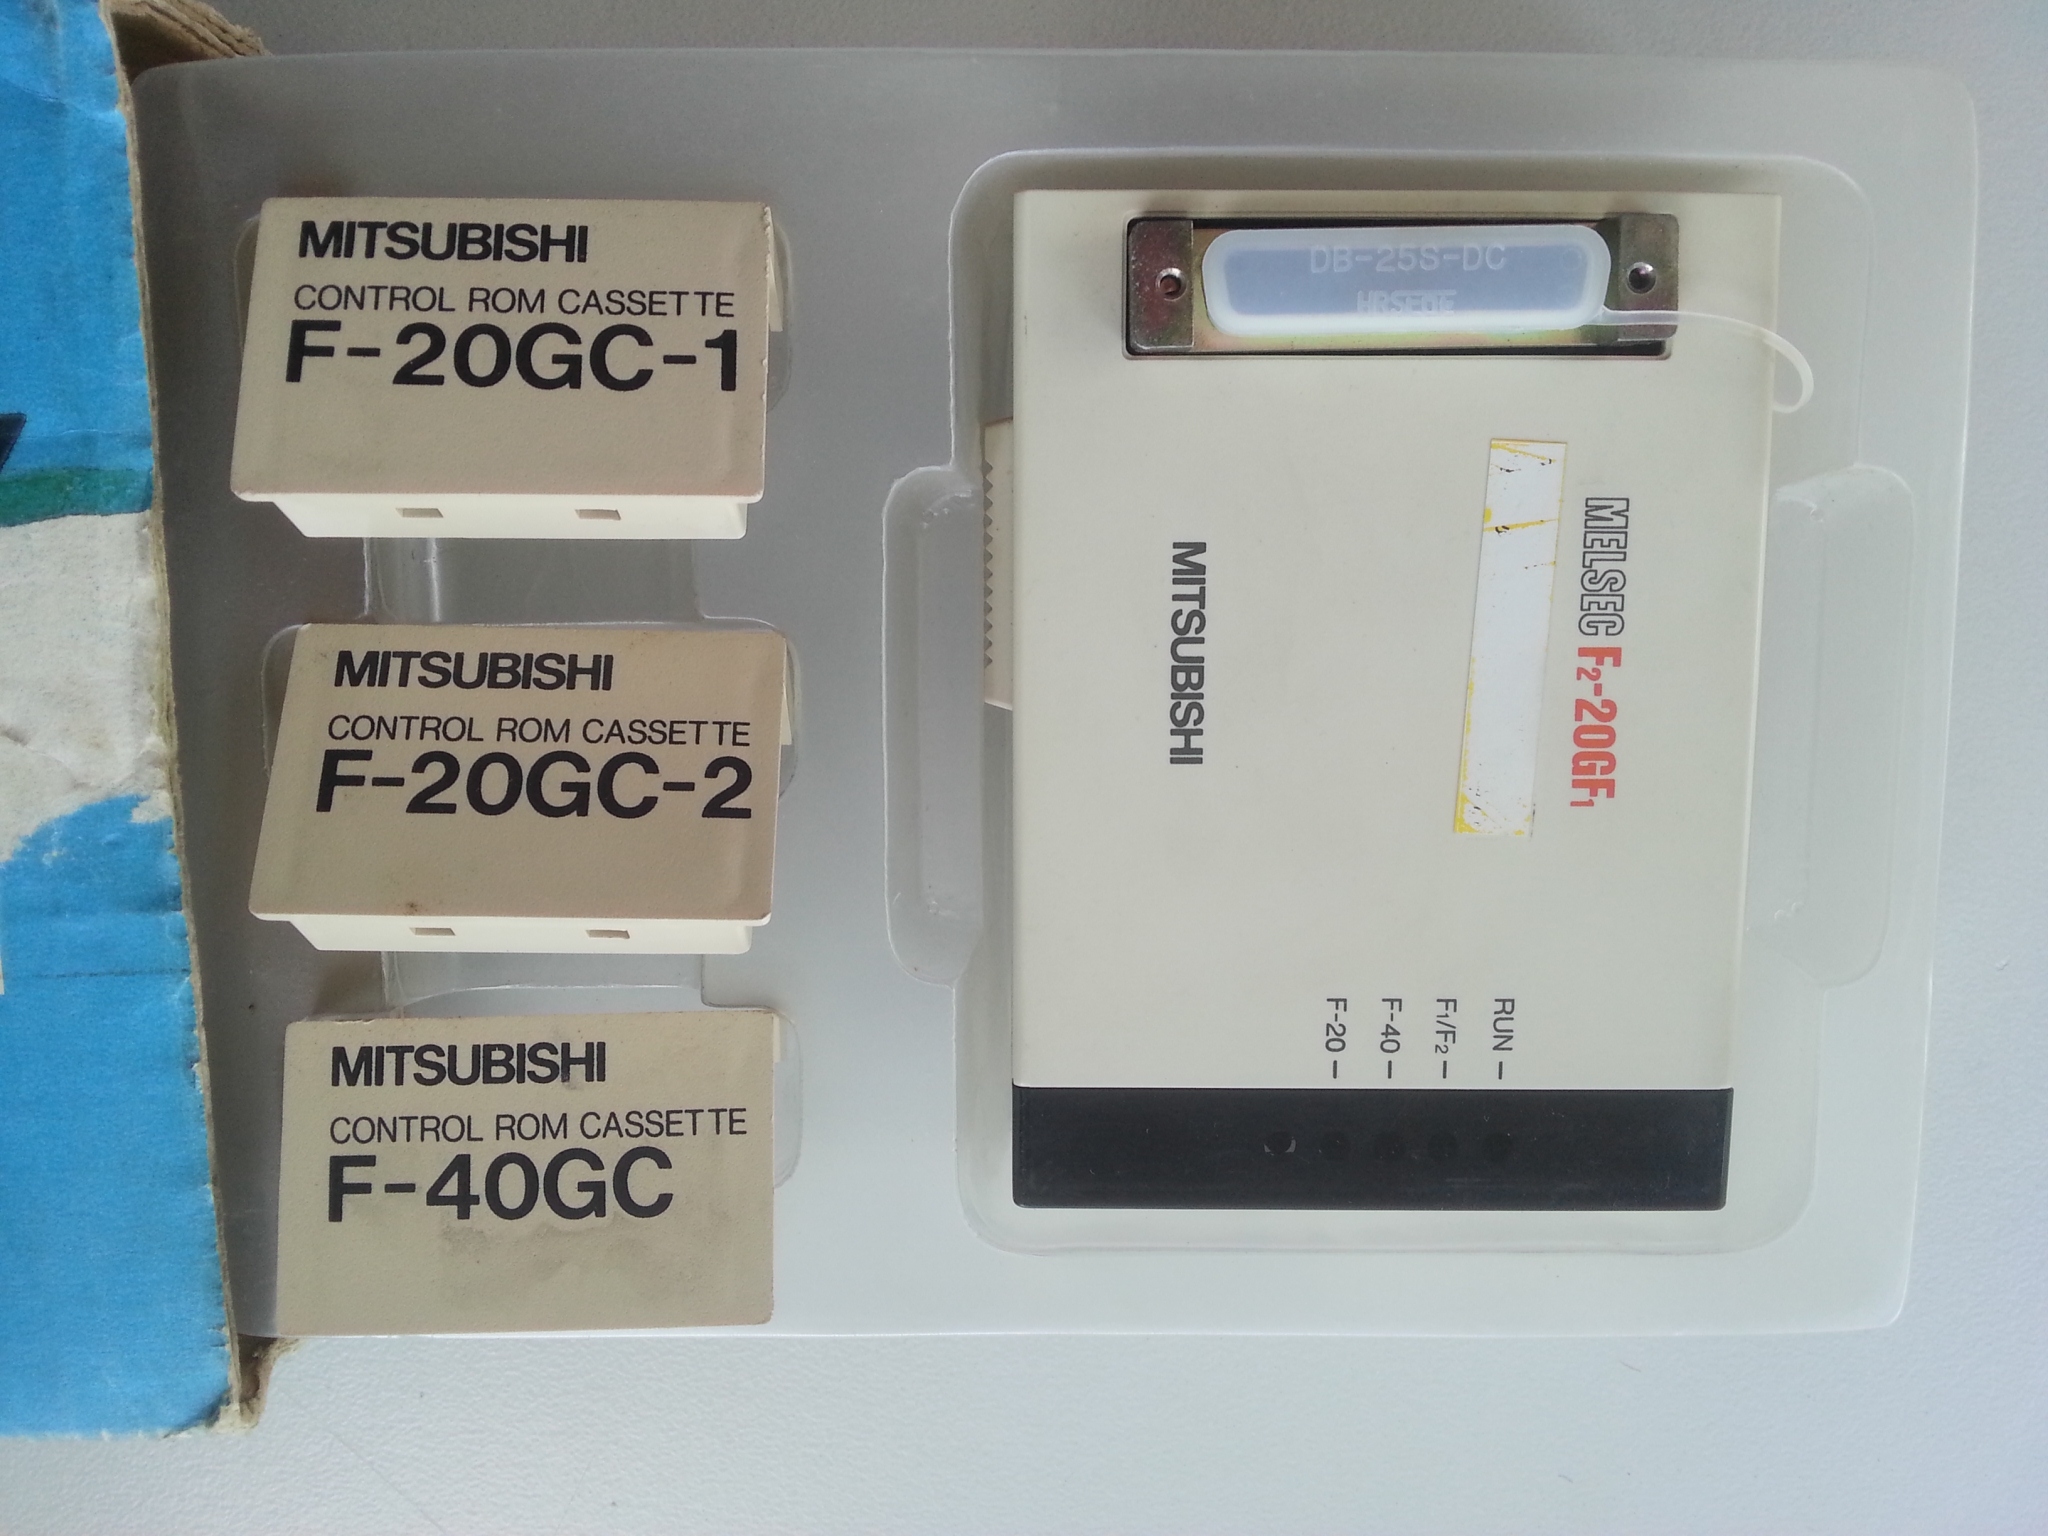 F2-20GF1 mitsubishi interface unit melsec plc.